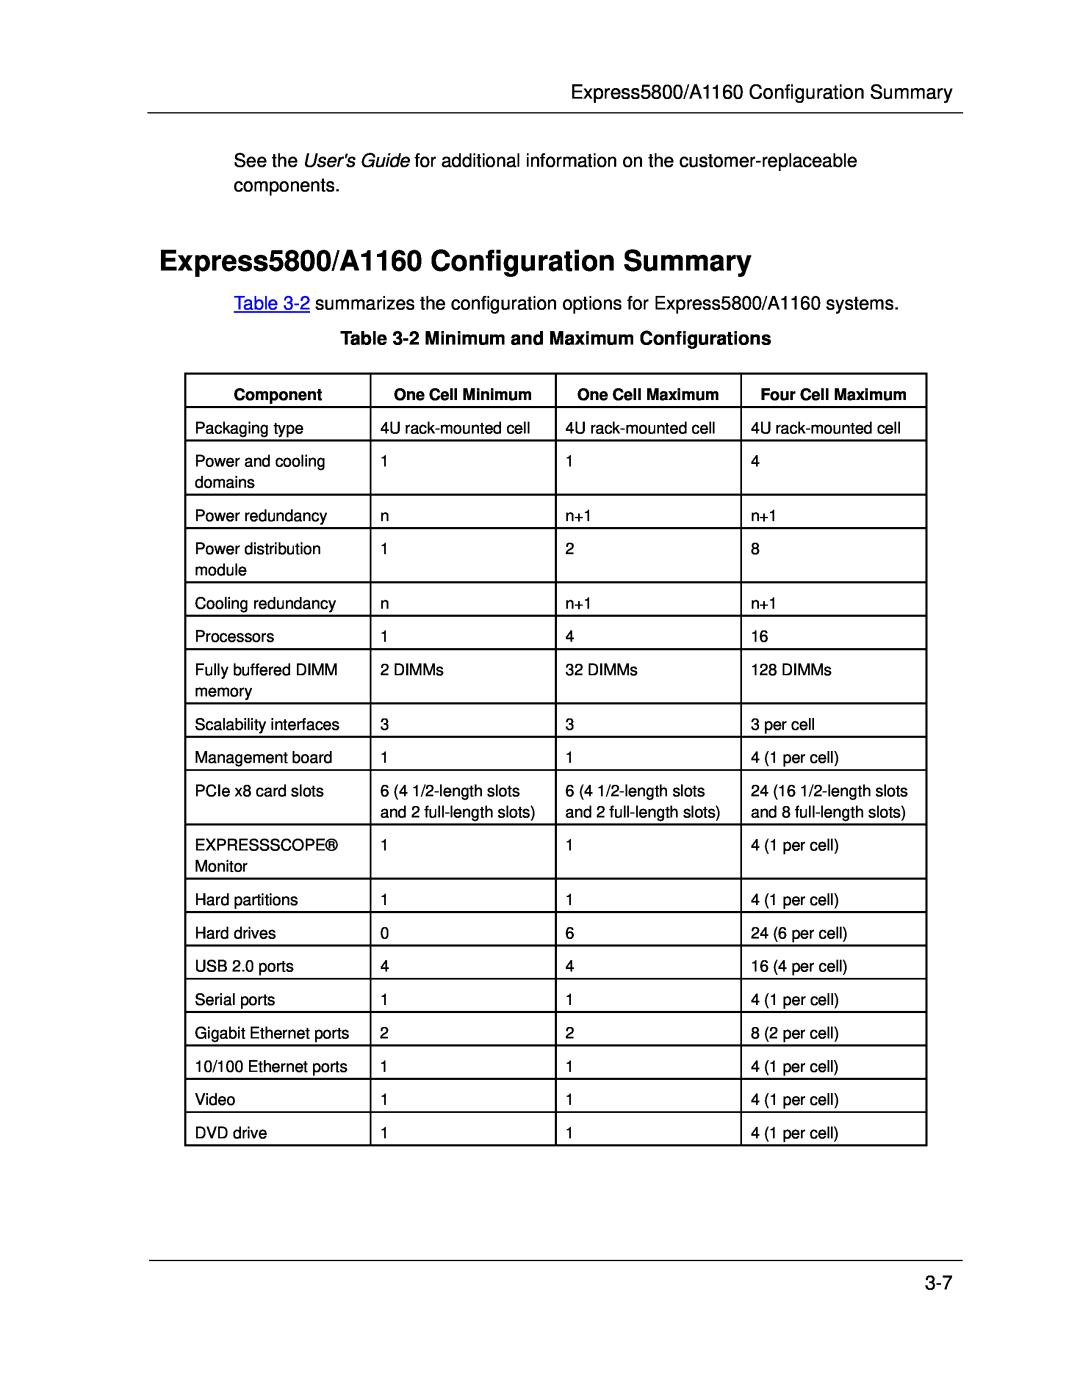 NEC manual Express5800/A1160 Configuration Summary, 2Minimum and Maximum Configurations 